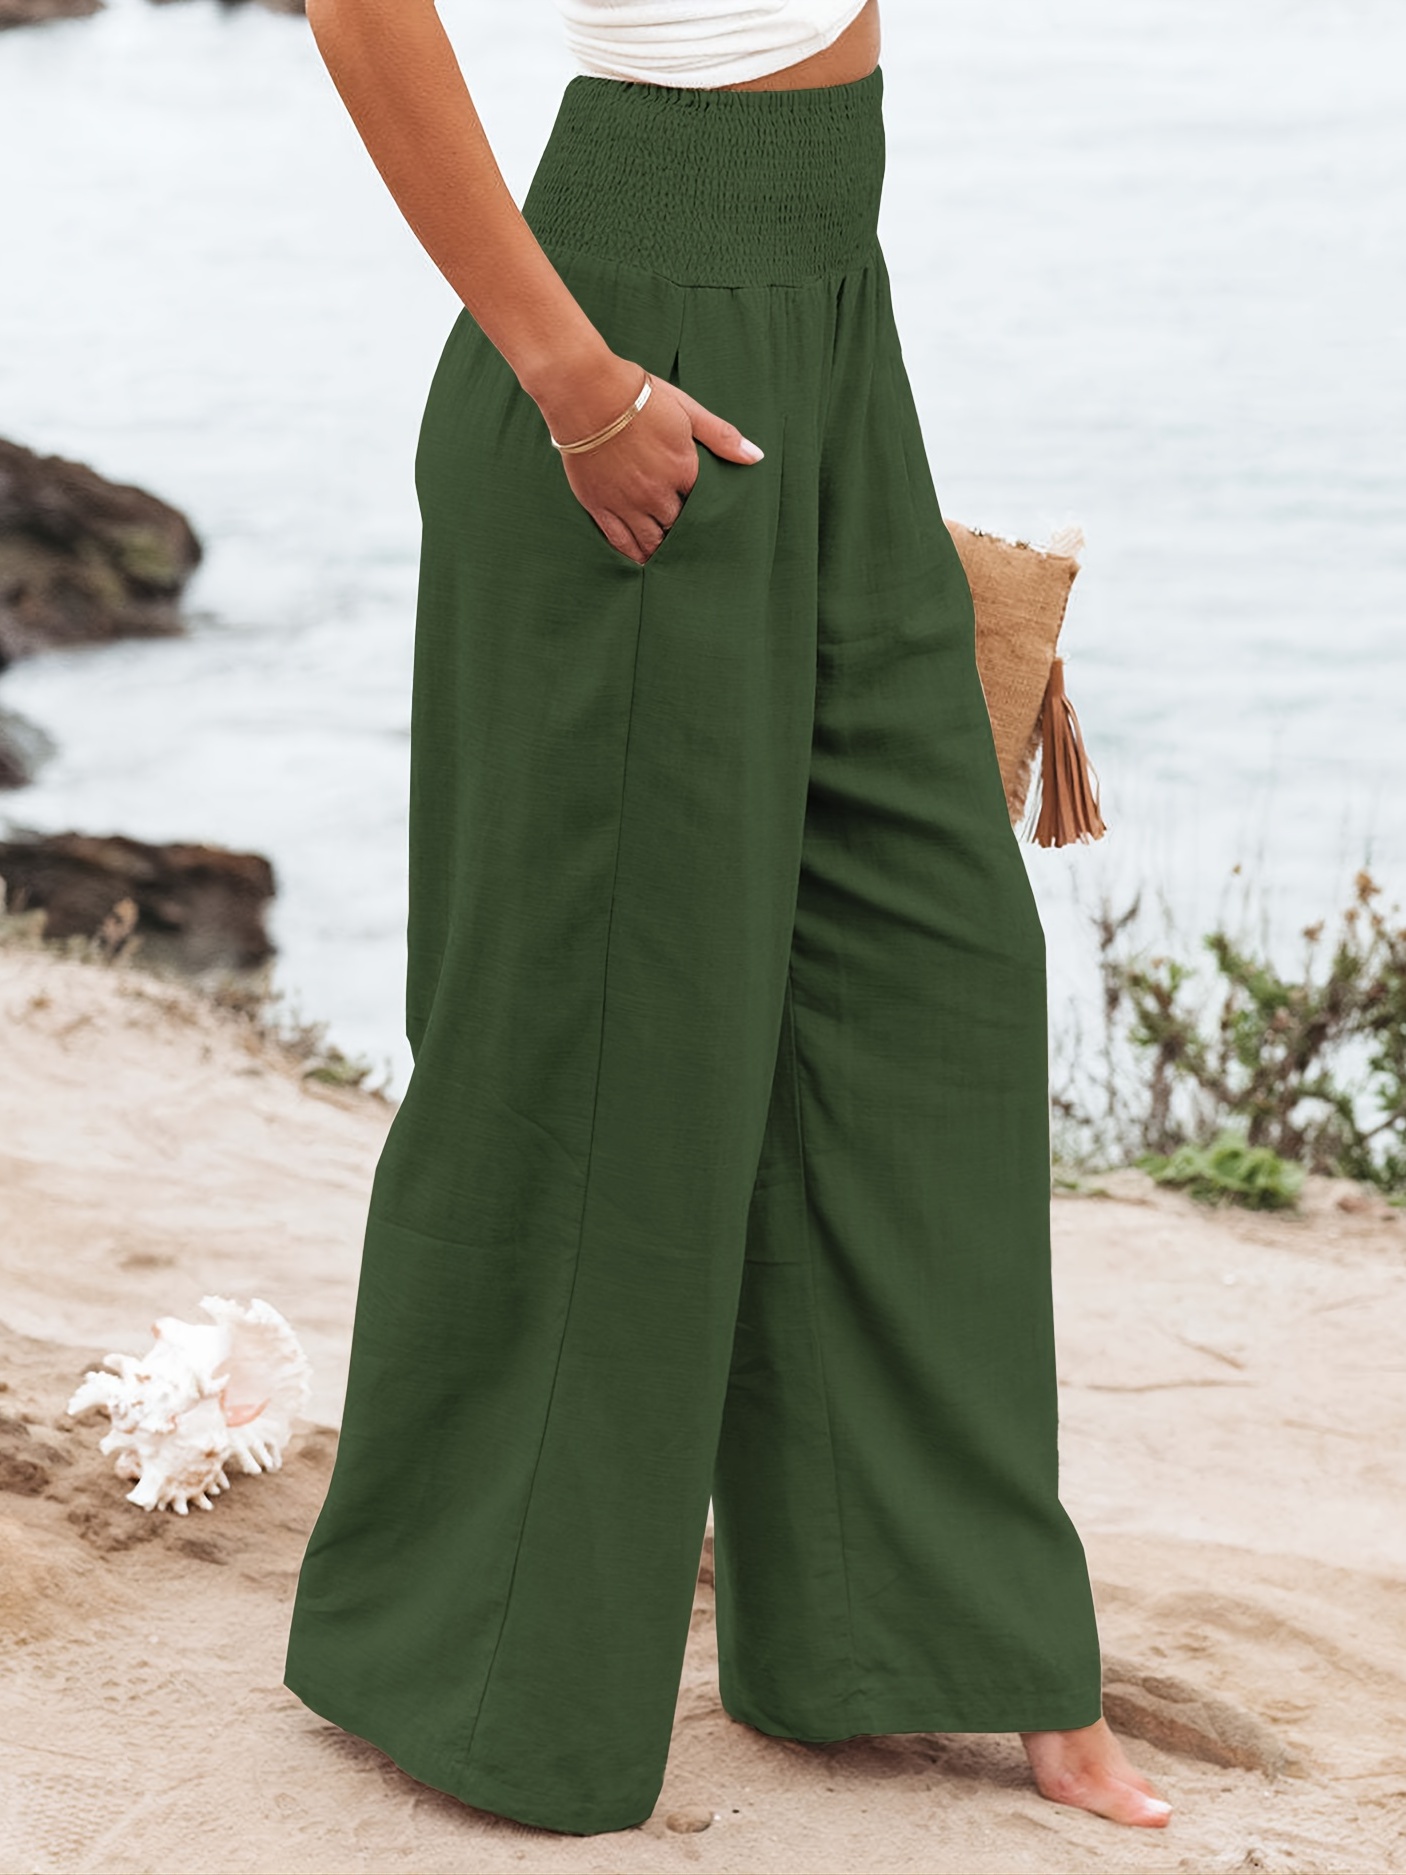 Cute Woven Olive Green Pants - Wide-Leg Pants - Belted Pants - Lulus